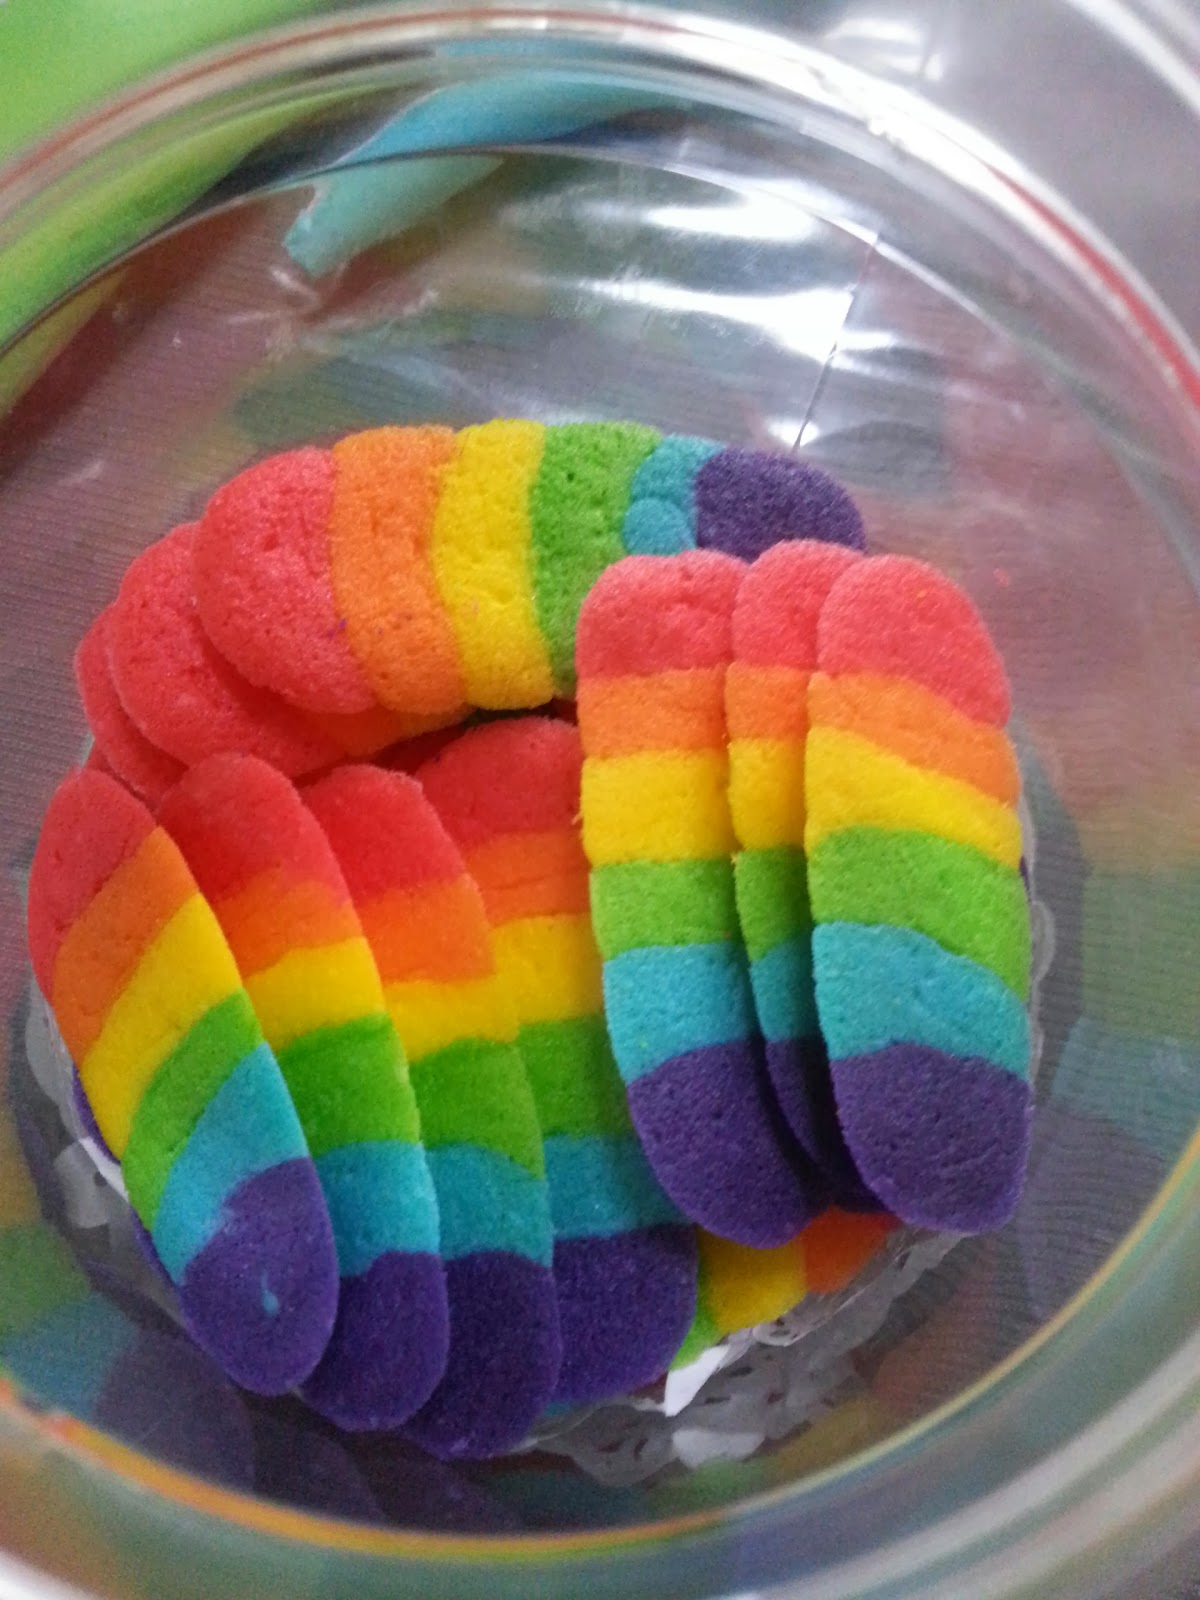 Sweetyfudge Bakery (001925672-X): Rainbow cookies